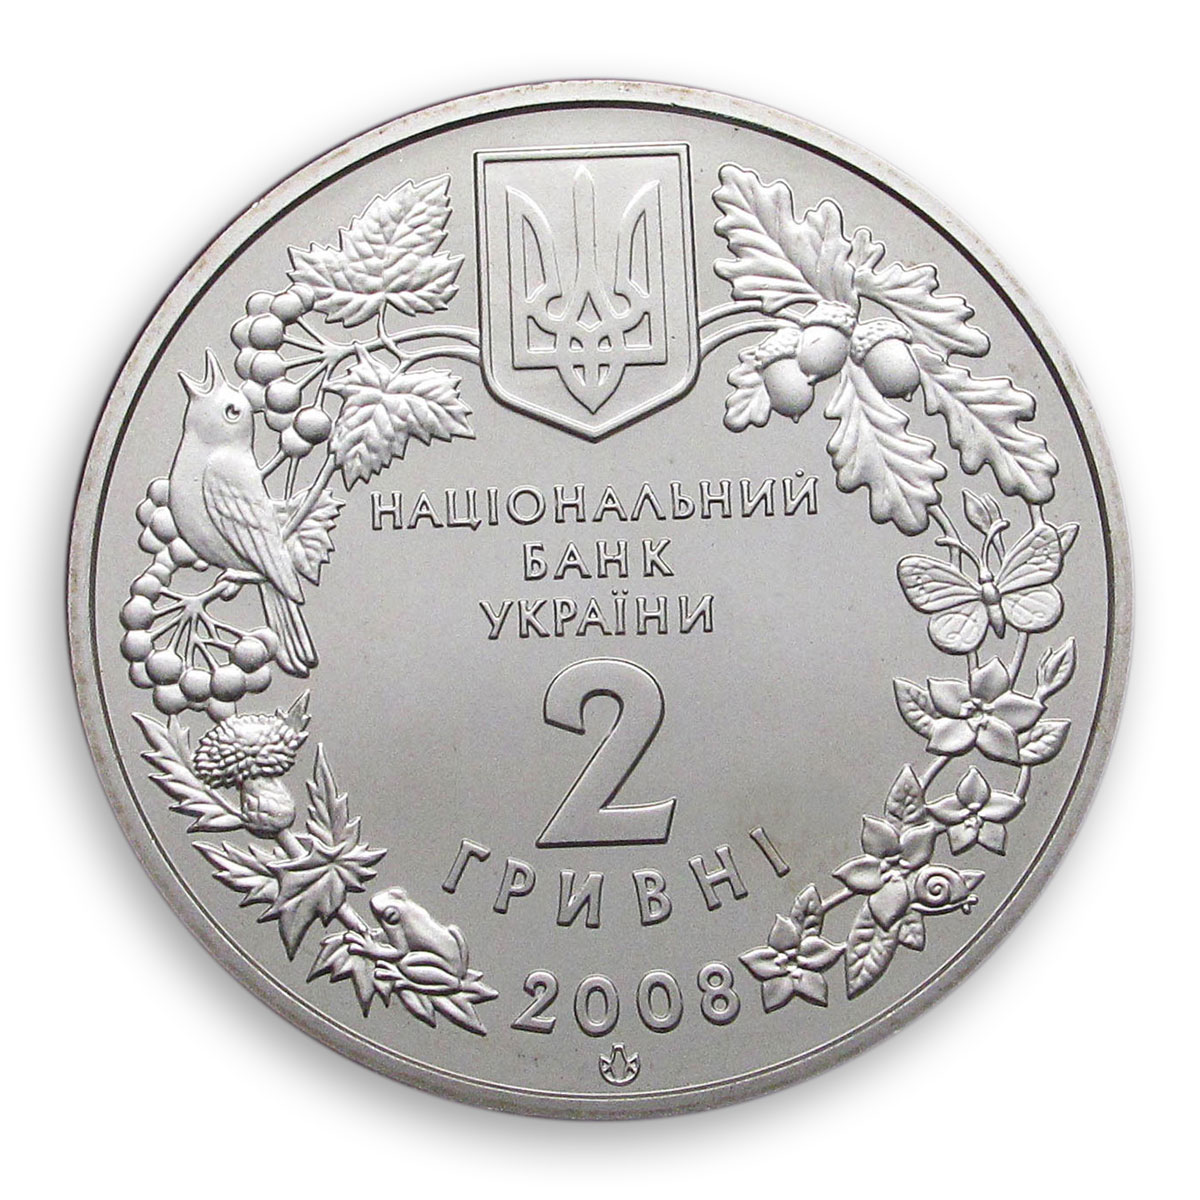 Ukraine 2 hryvnia Black vulture Aegypius monachus griffin fauna nickel coin 2008